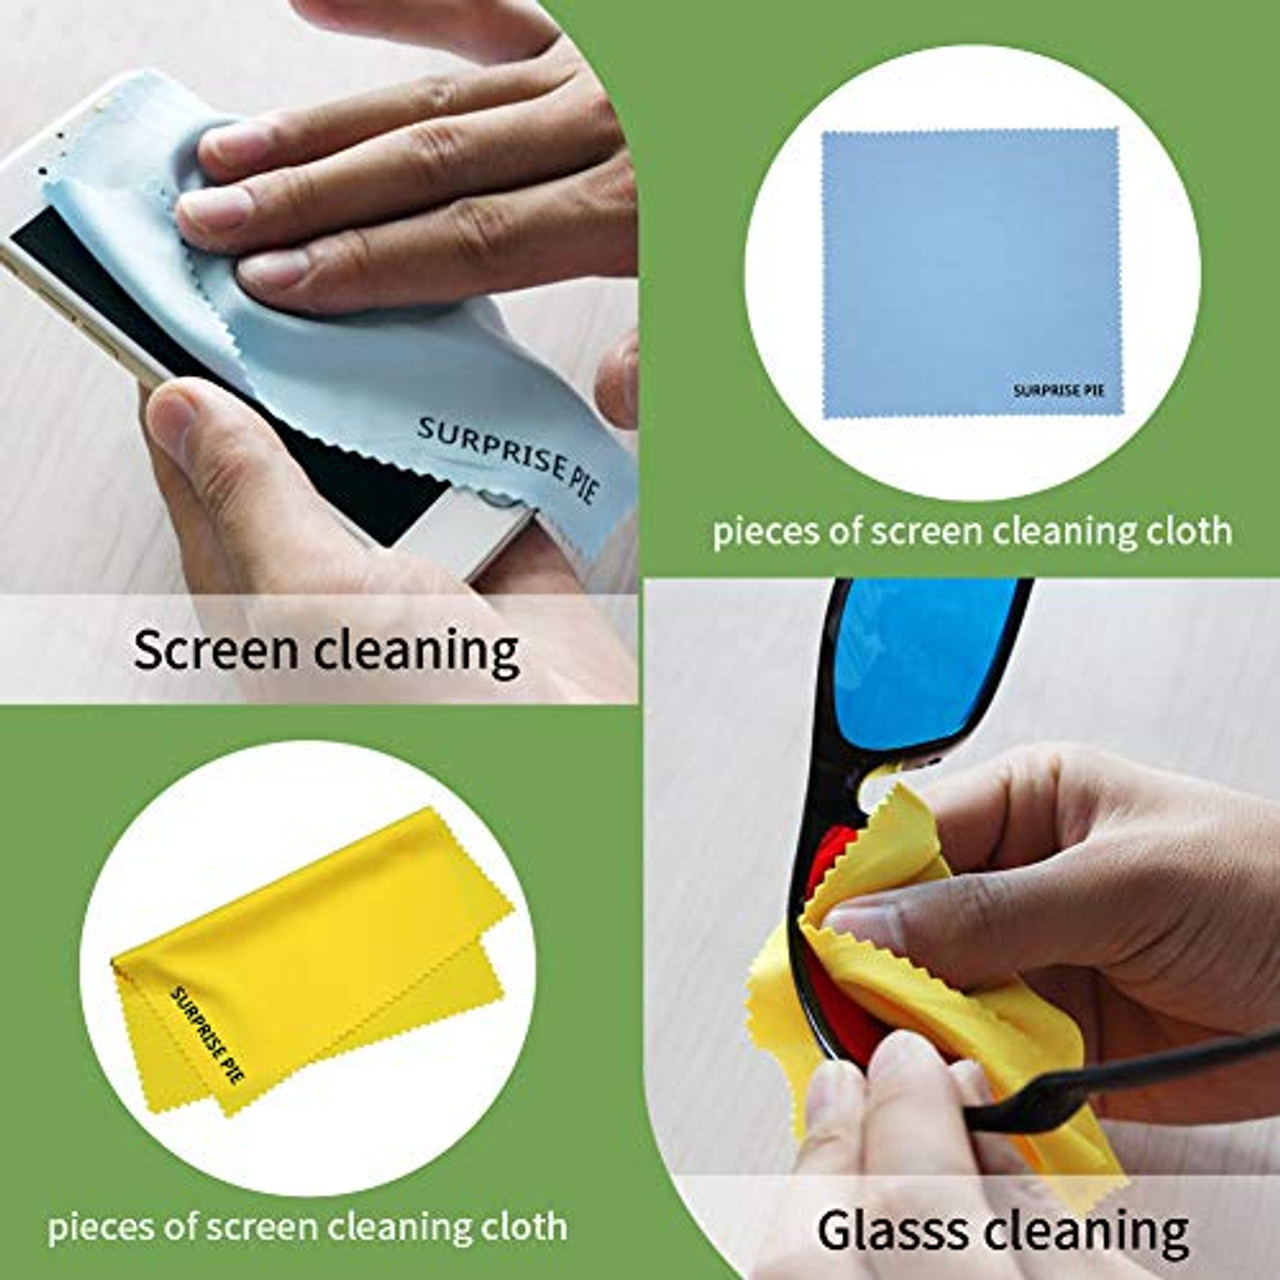 12x12 400GSM Microfiber Cleaning Cloth 6PCS 3 Colors(Green Blue